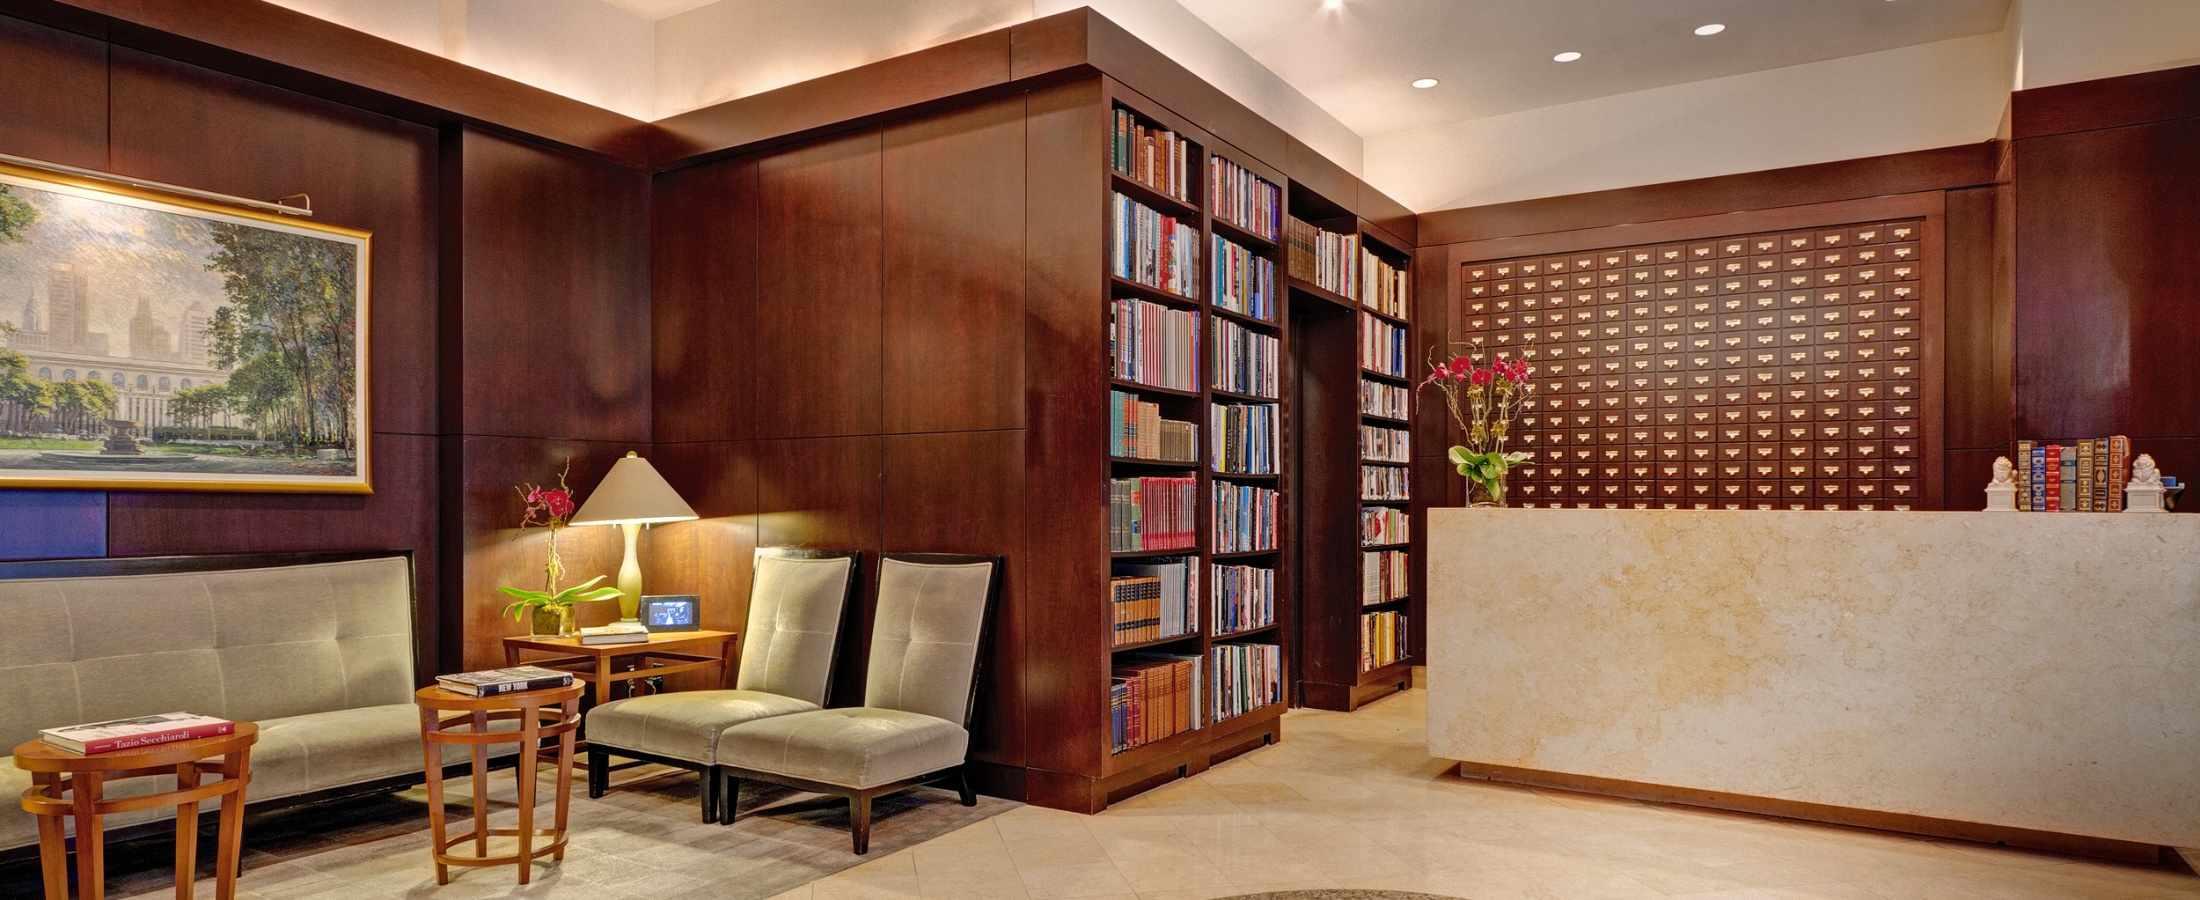 Library Hotel New York City - Reception